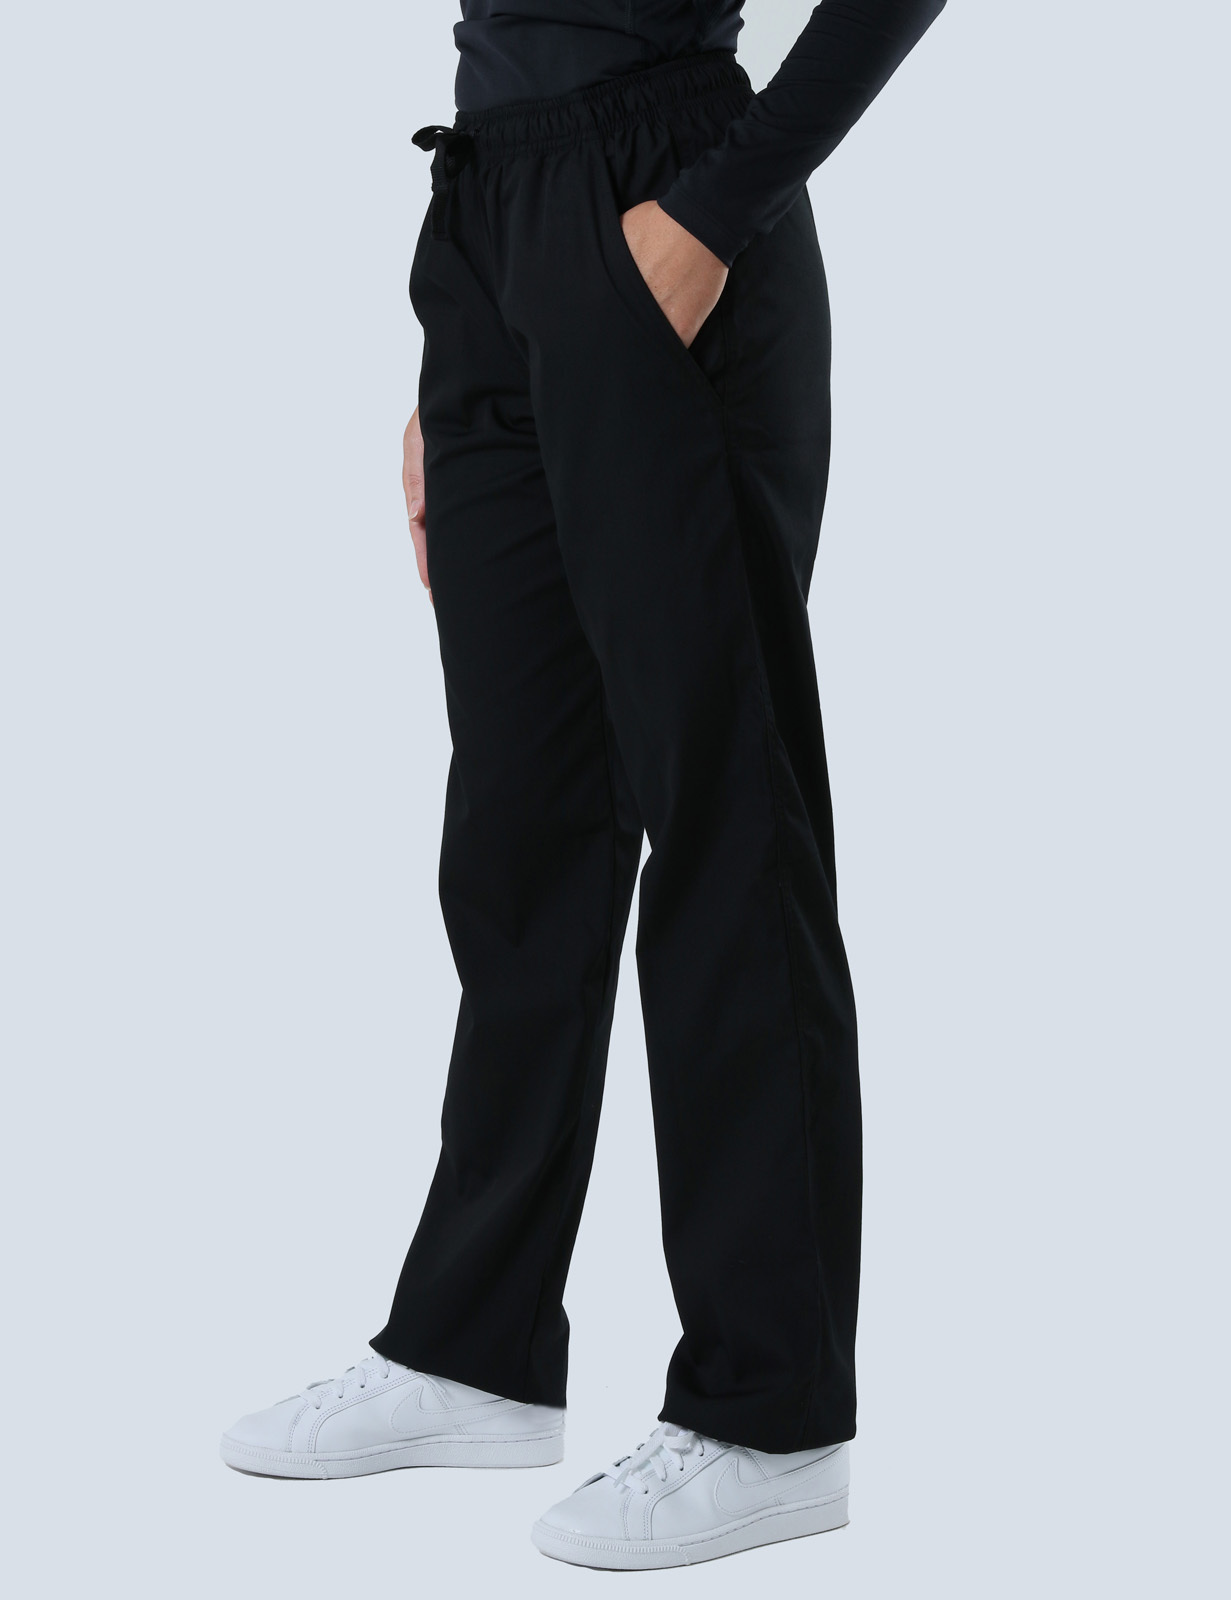 Women's Utility Pants - Black - 4X large